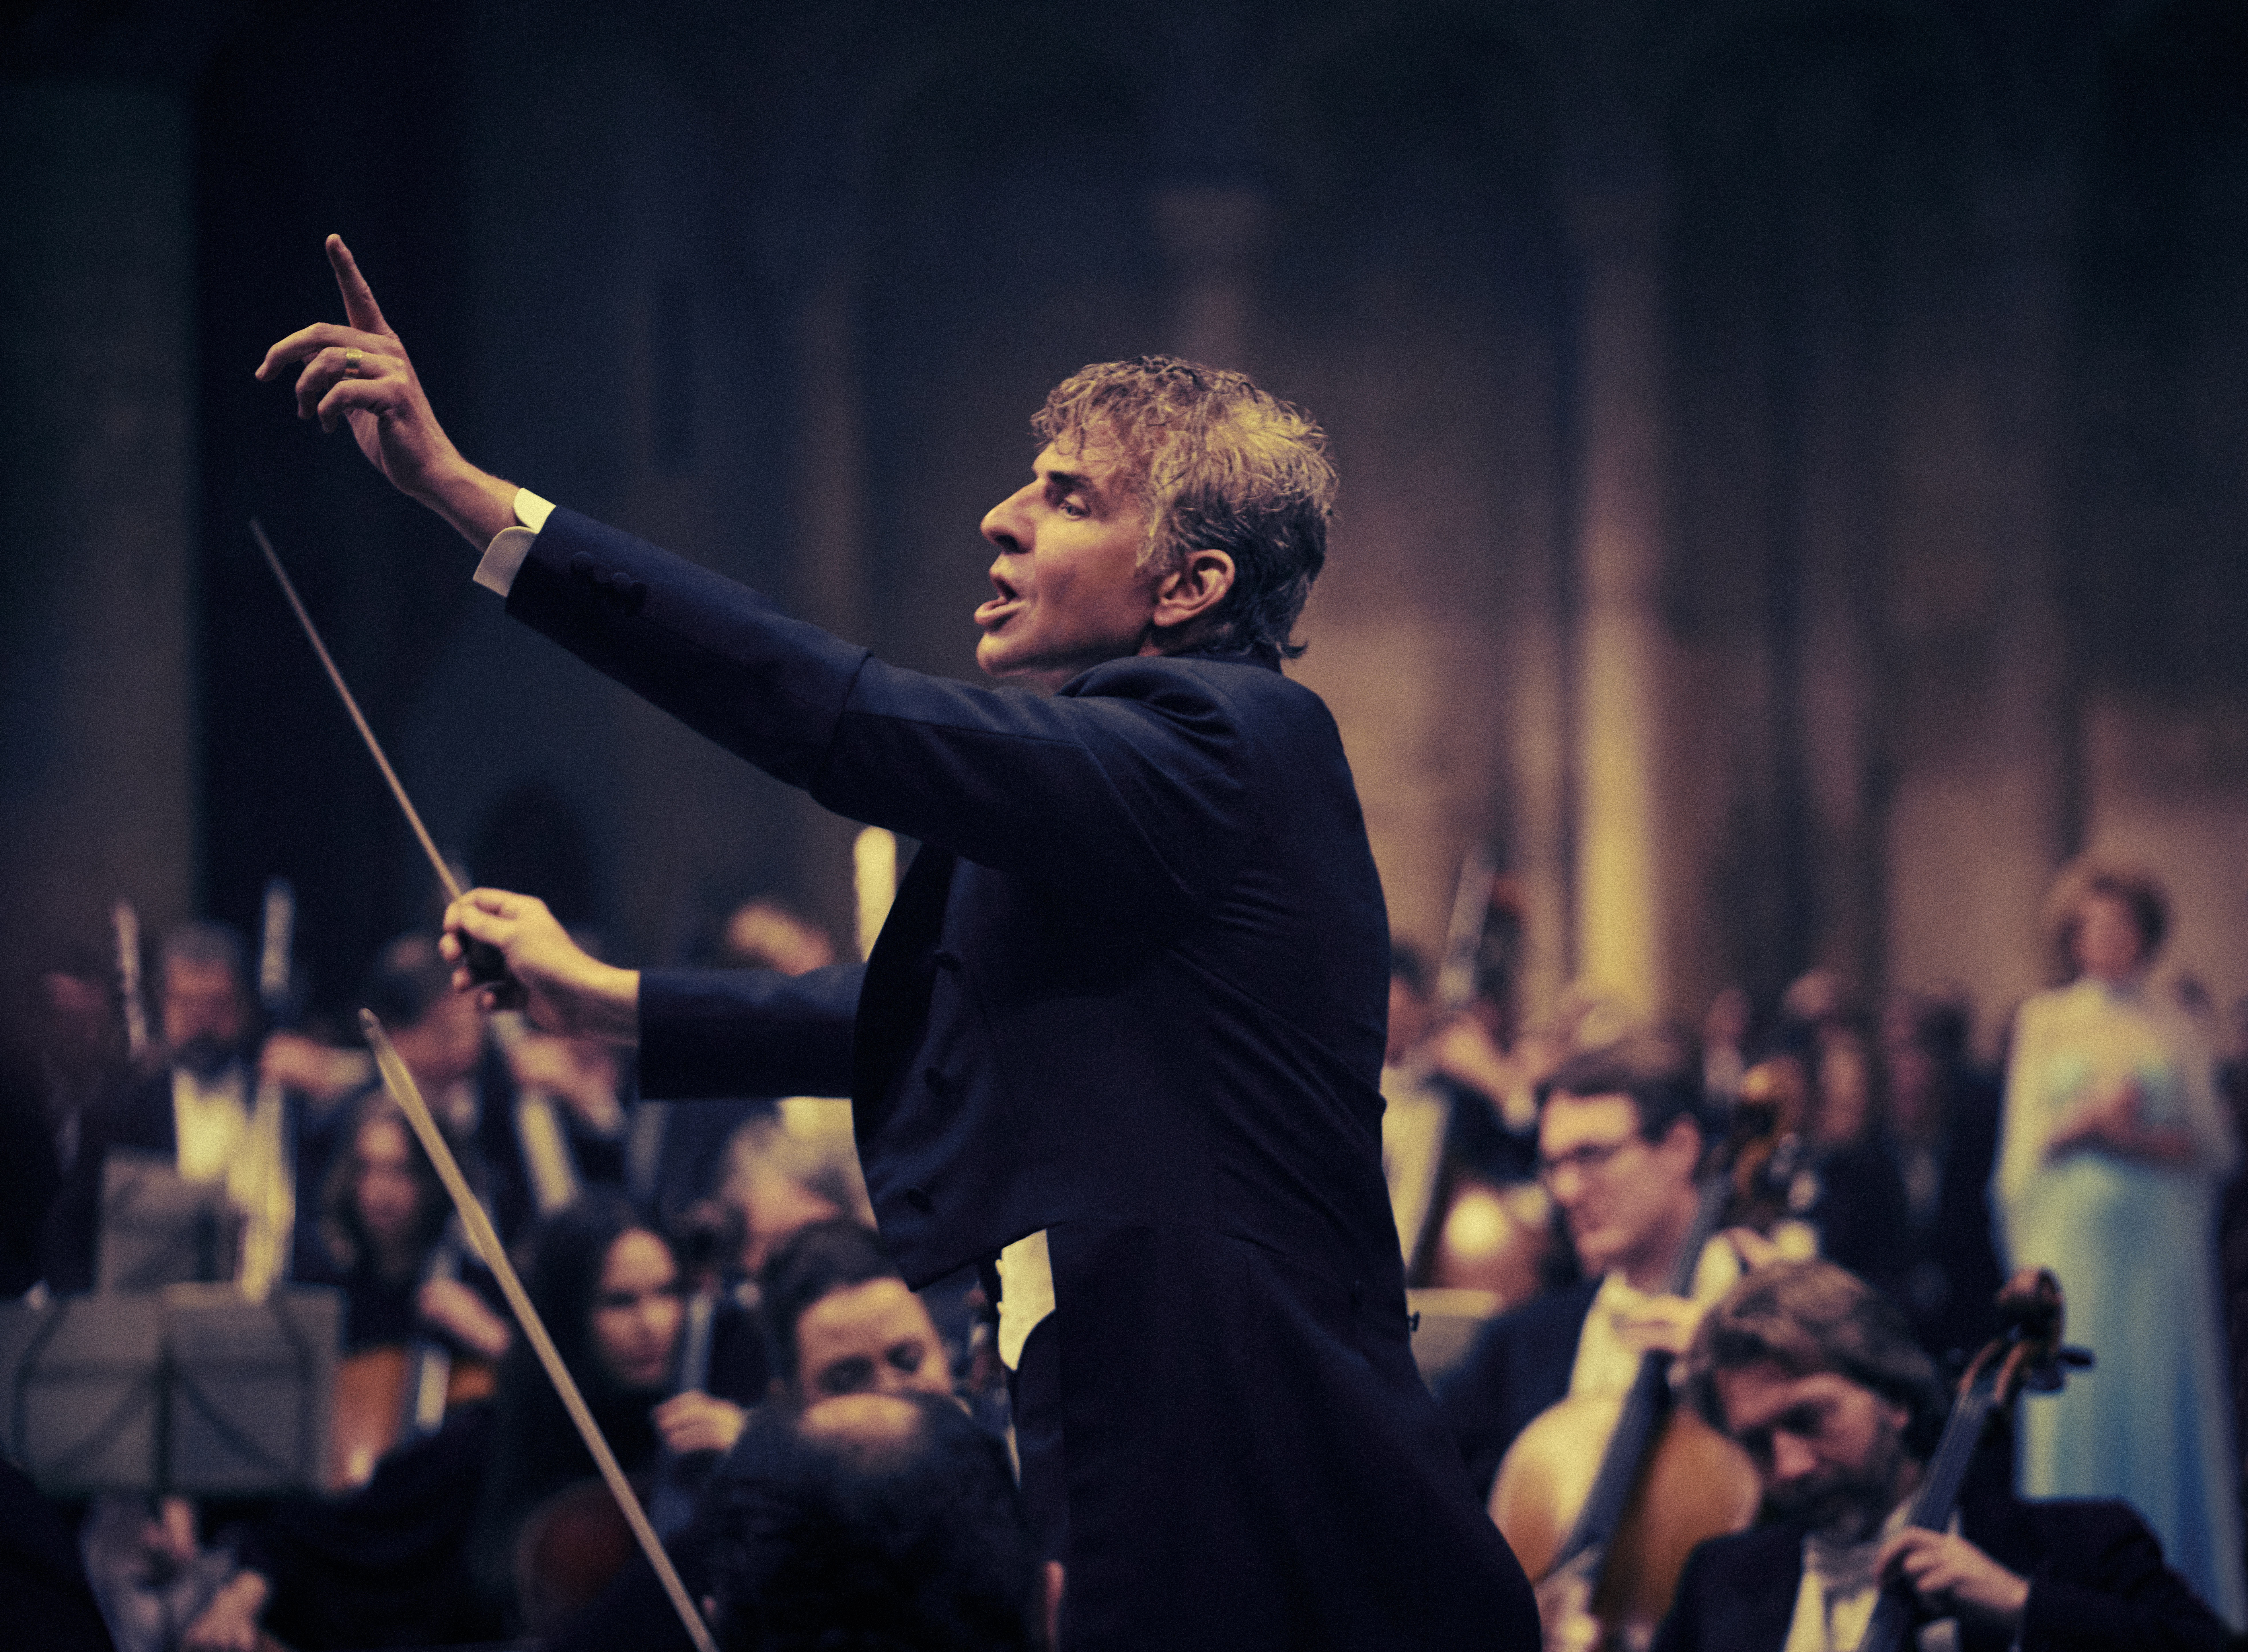 Bradley Cooper passionately conducting as Leonard Bernstein in Netflix’s Maestro